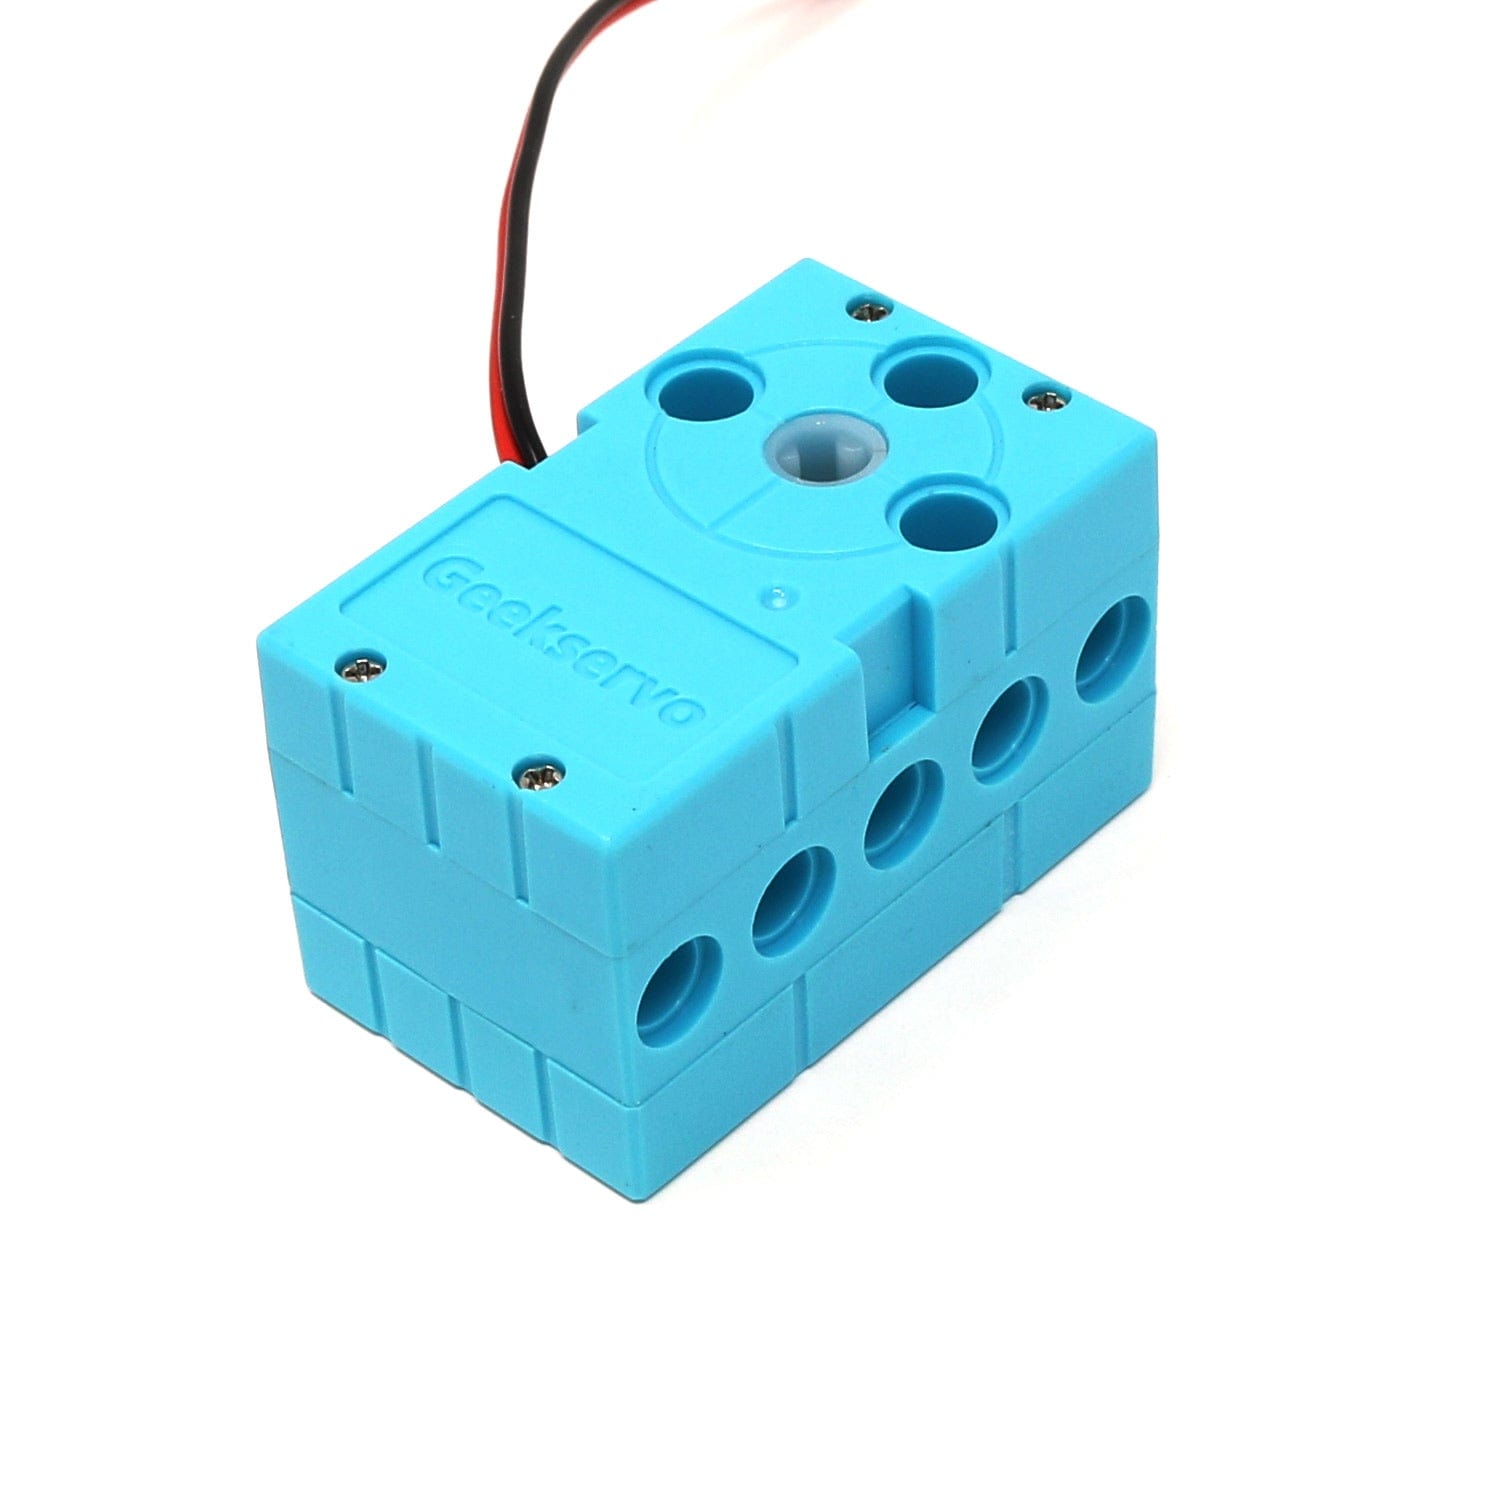 GeekServo LEGO-Compatible Block Motor - The Pi Hut